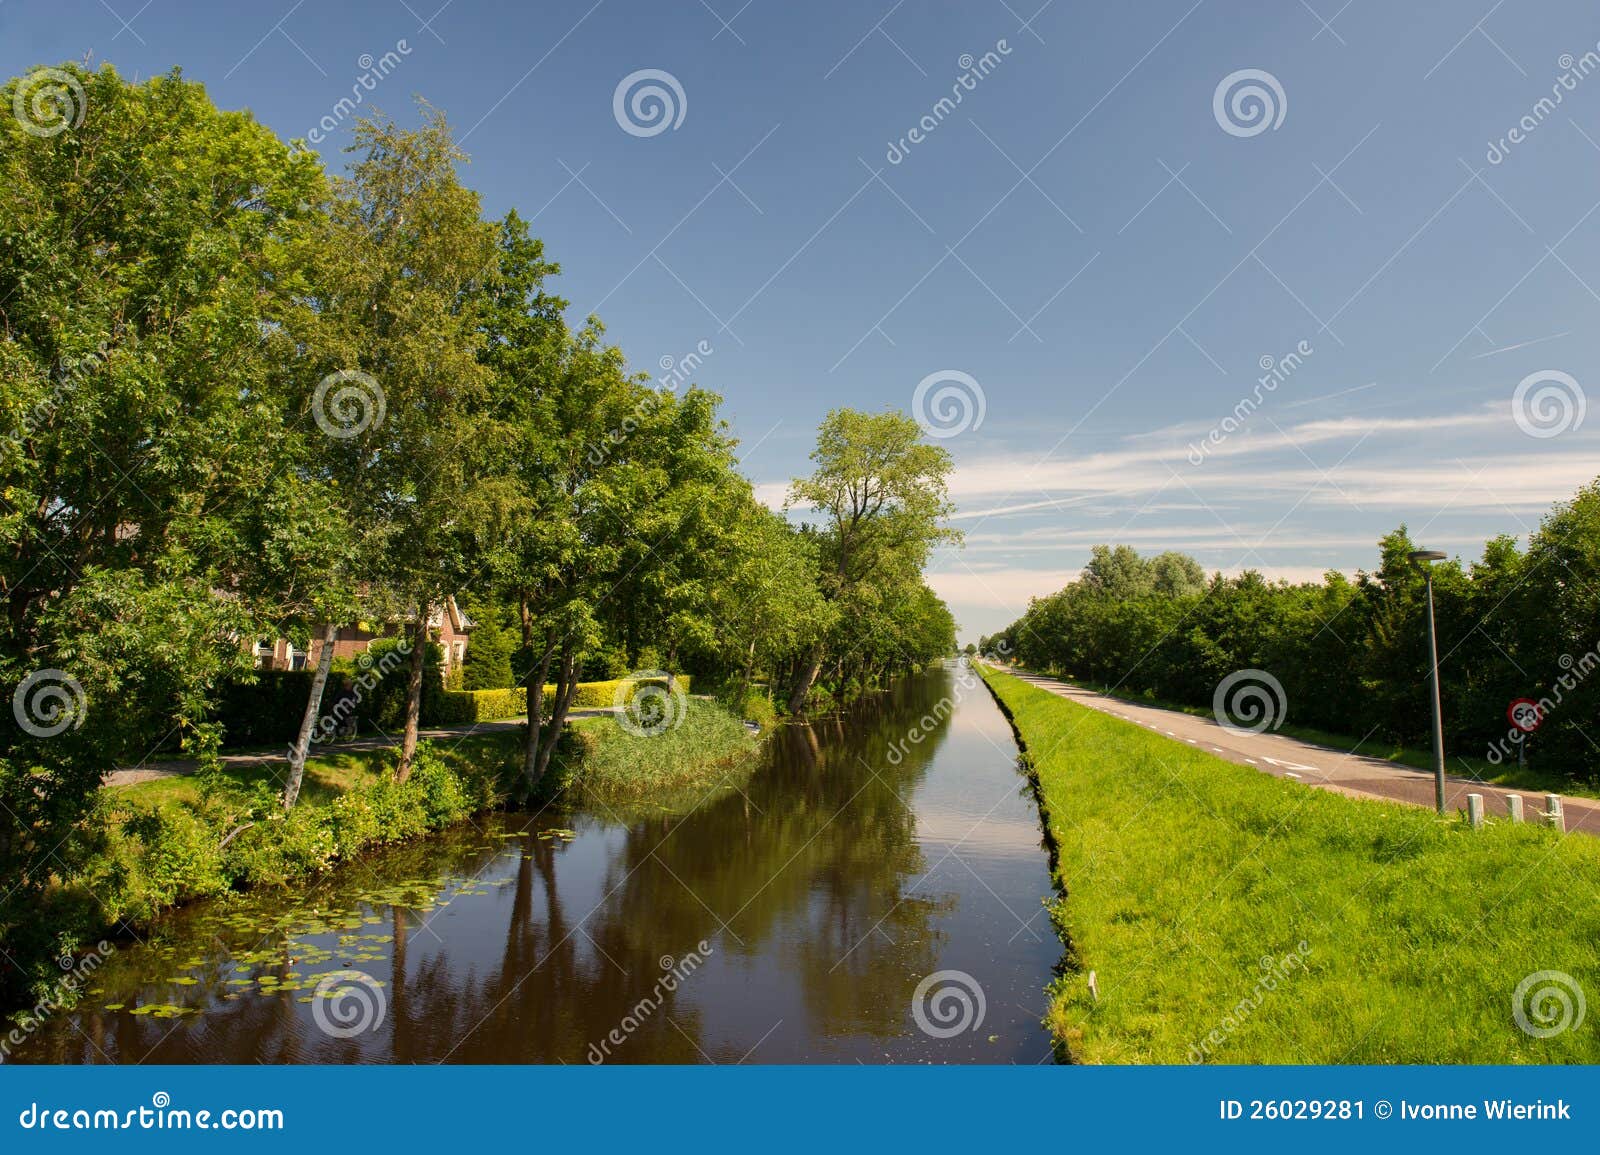 landscape in dutch friesland